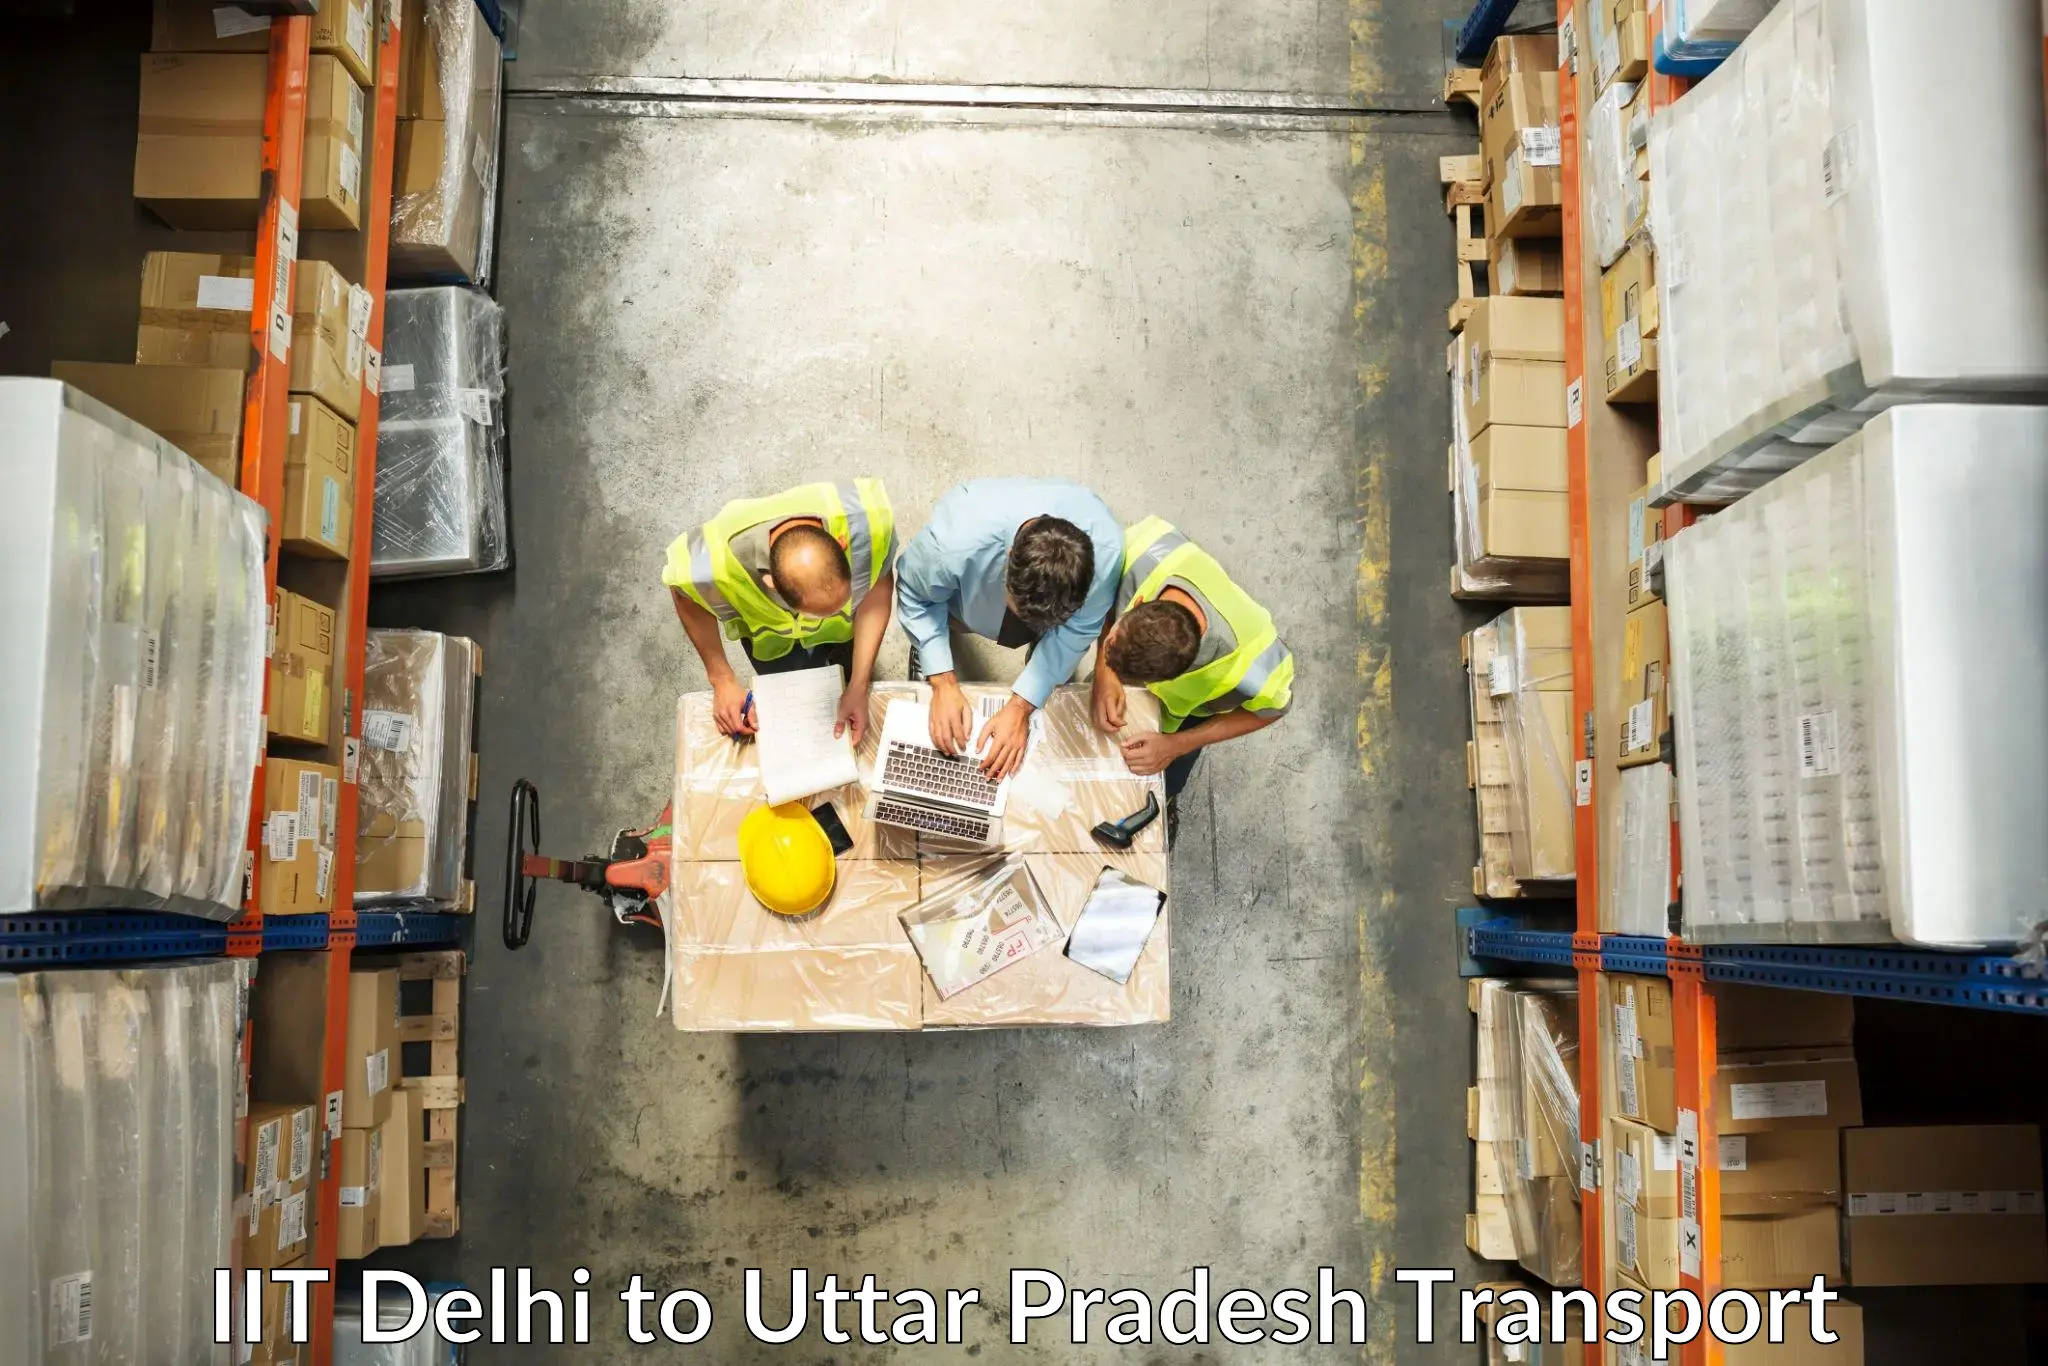 Shipping partner IIT Delhi to Kirauli